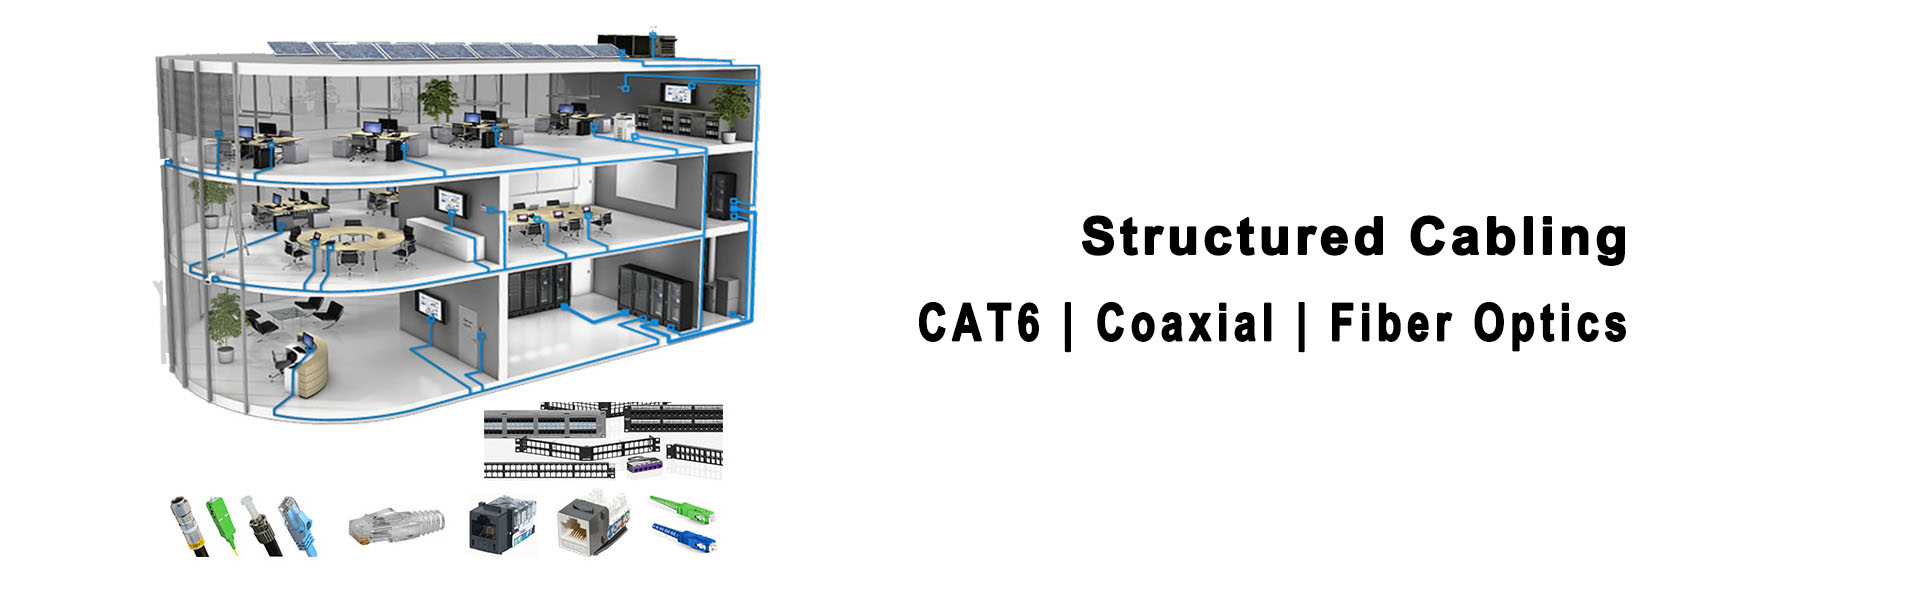 structured cabling-adat